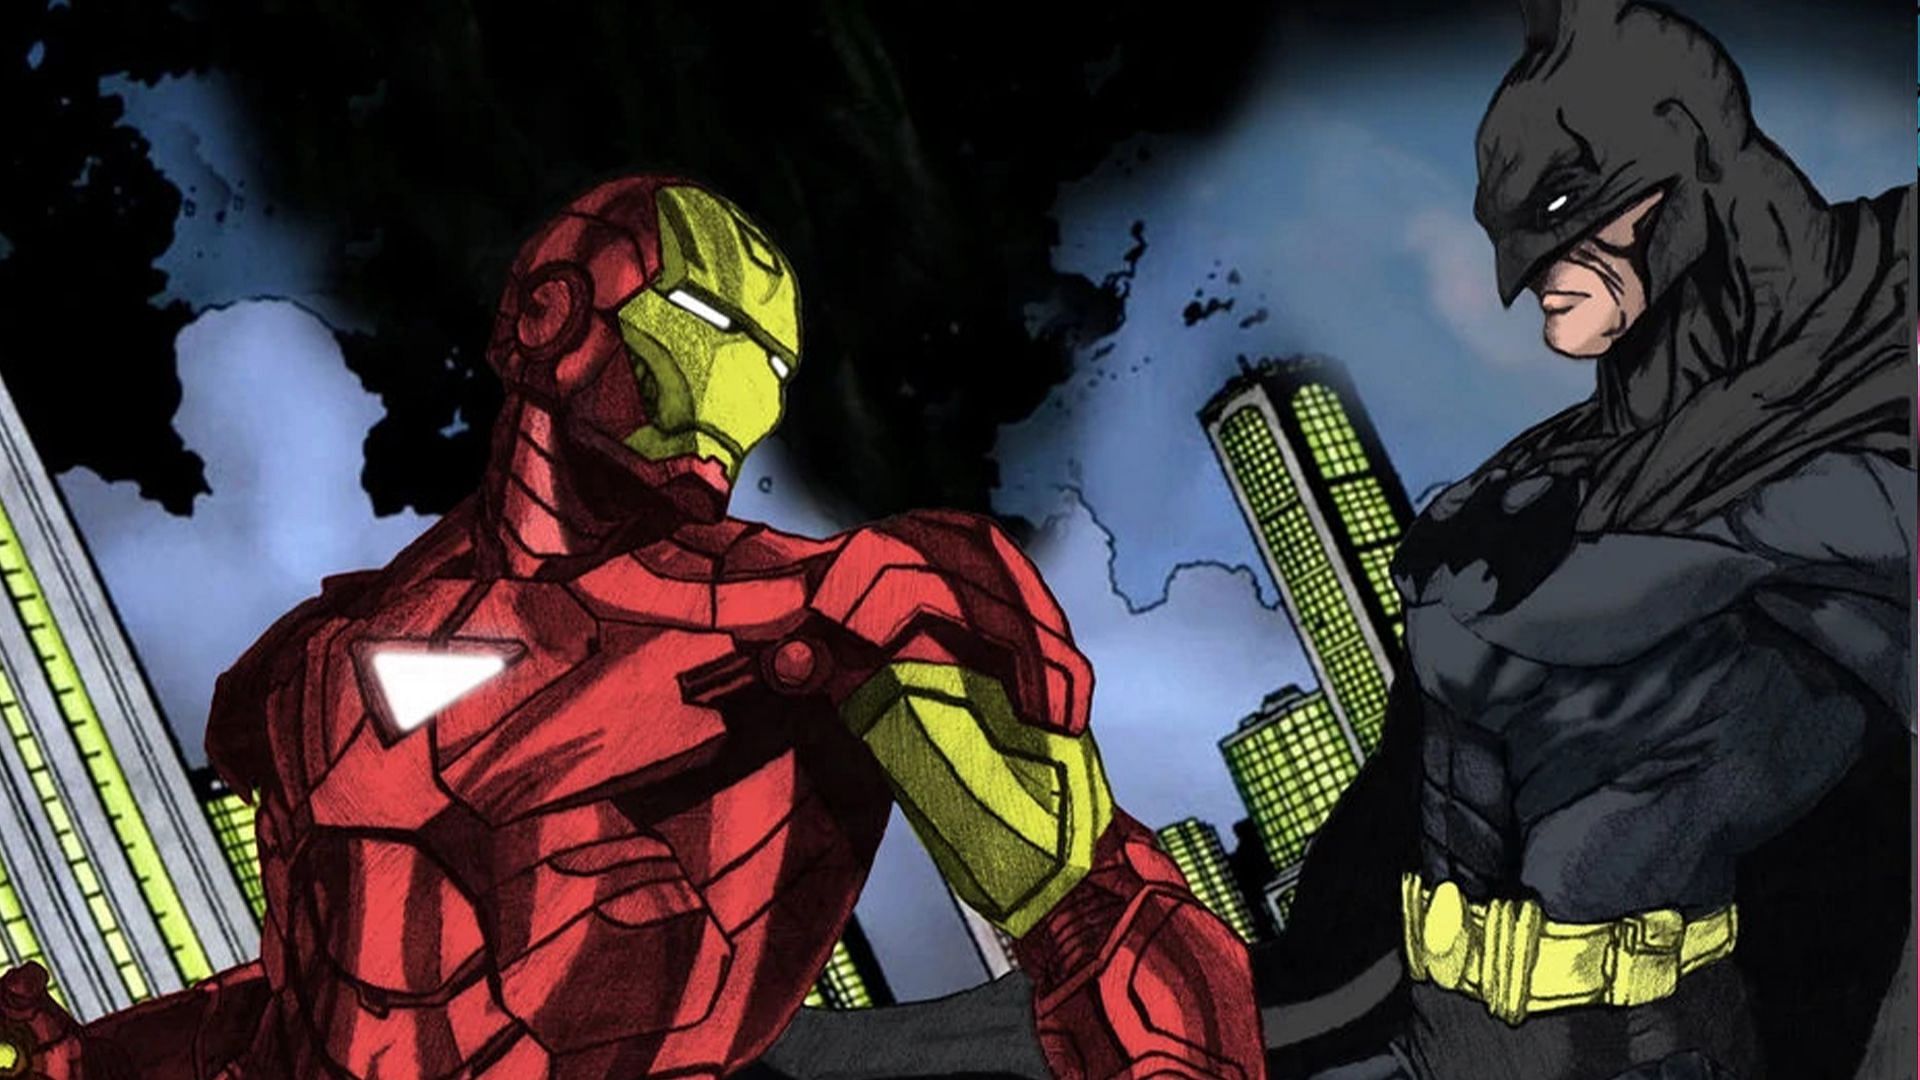 Batman vs. Iron Man from the crossover comic (Image via Marvel)